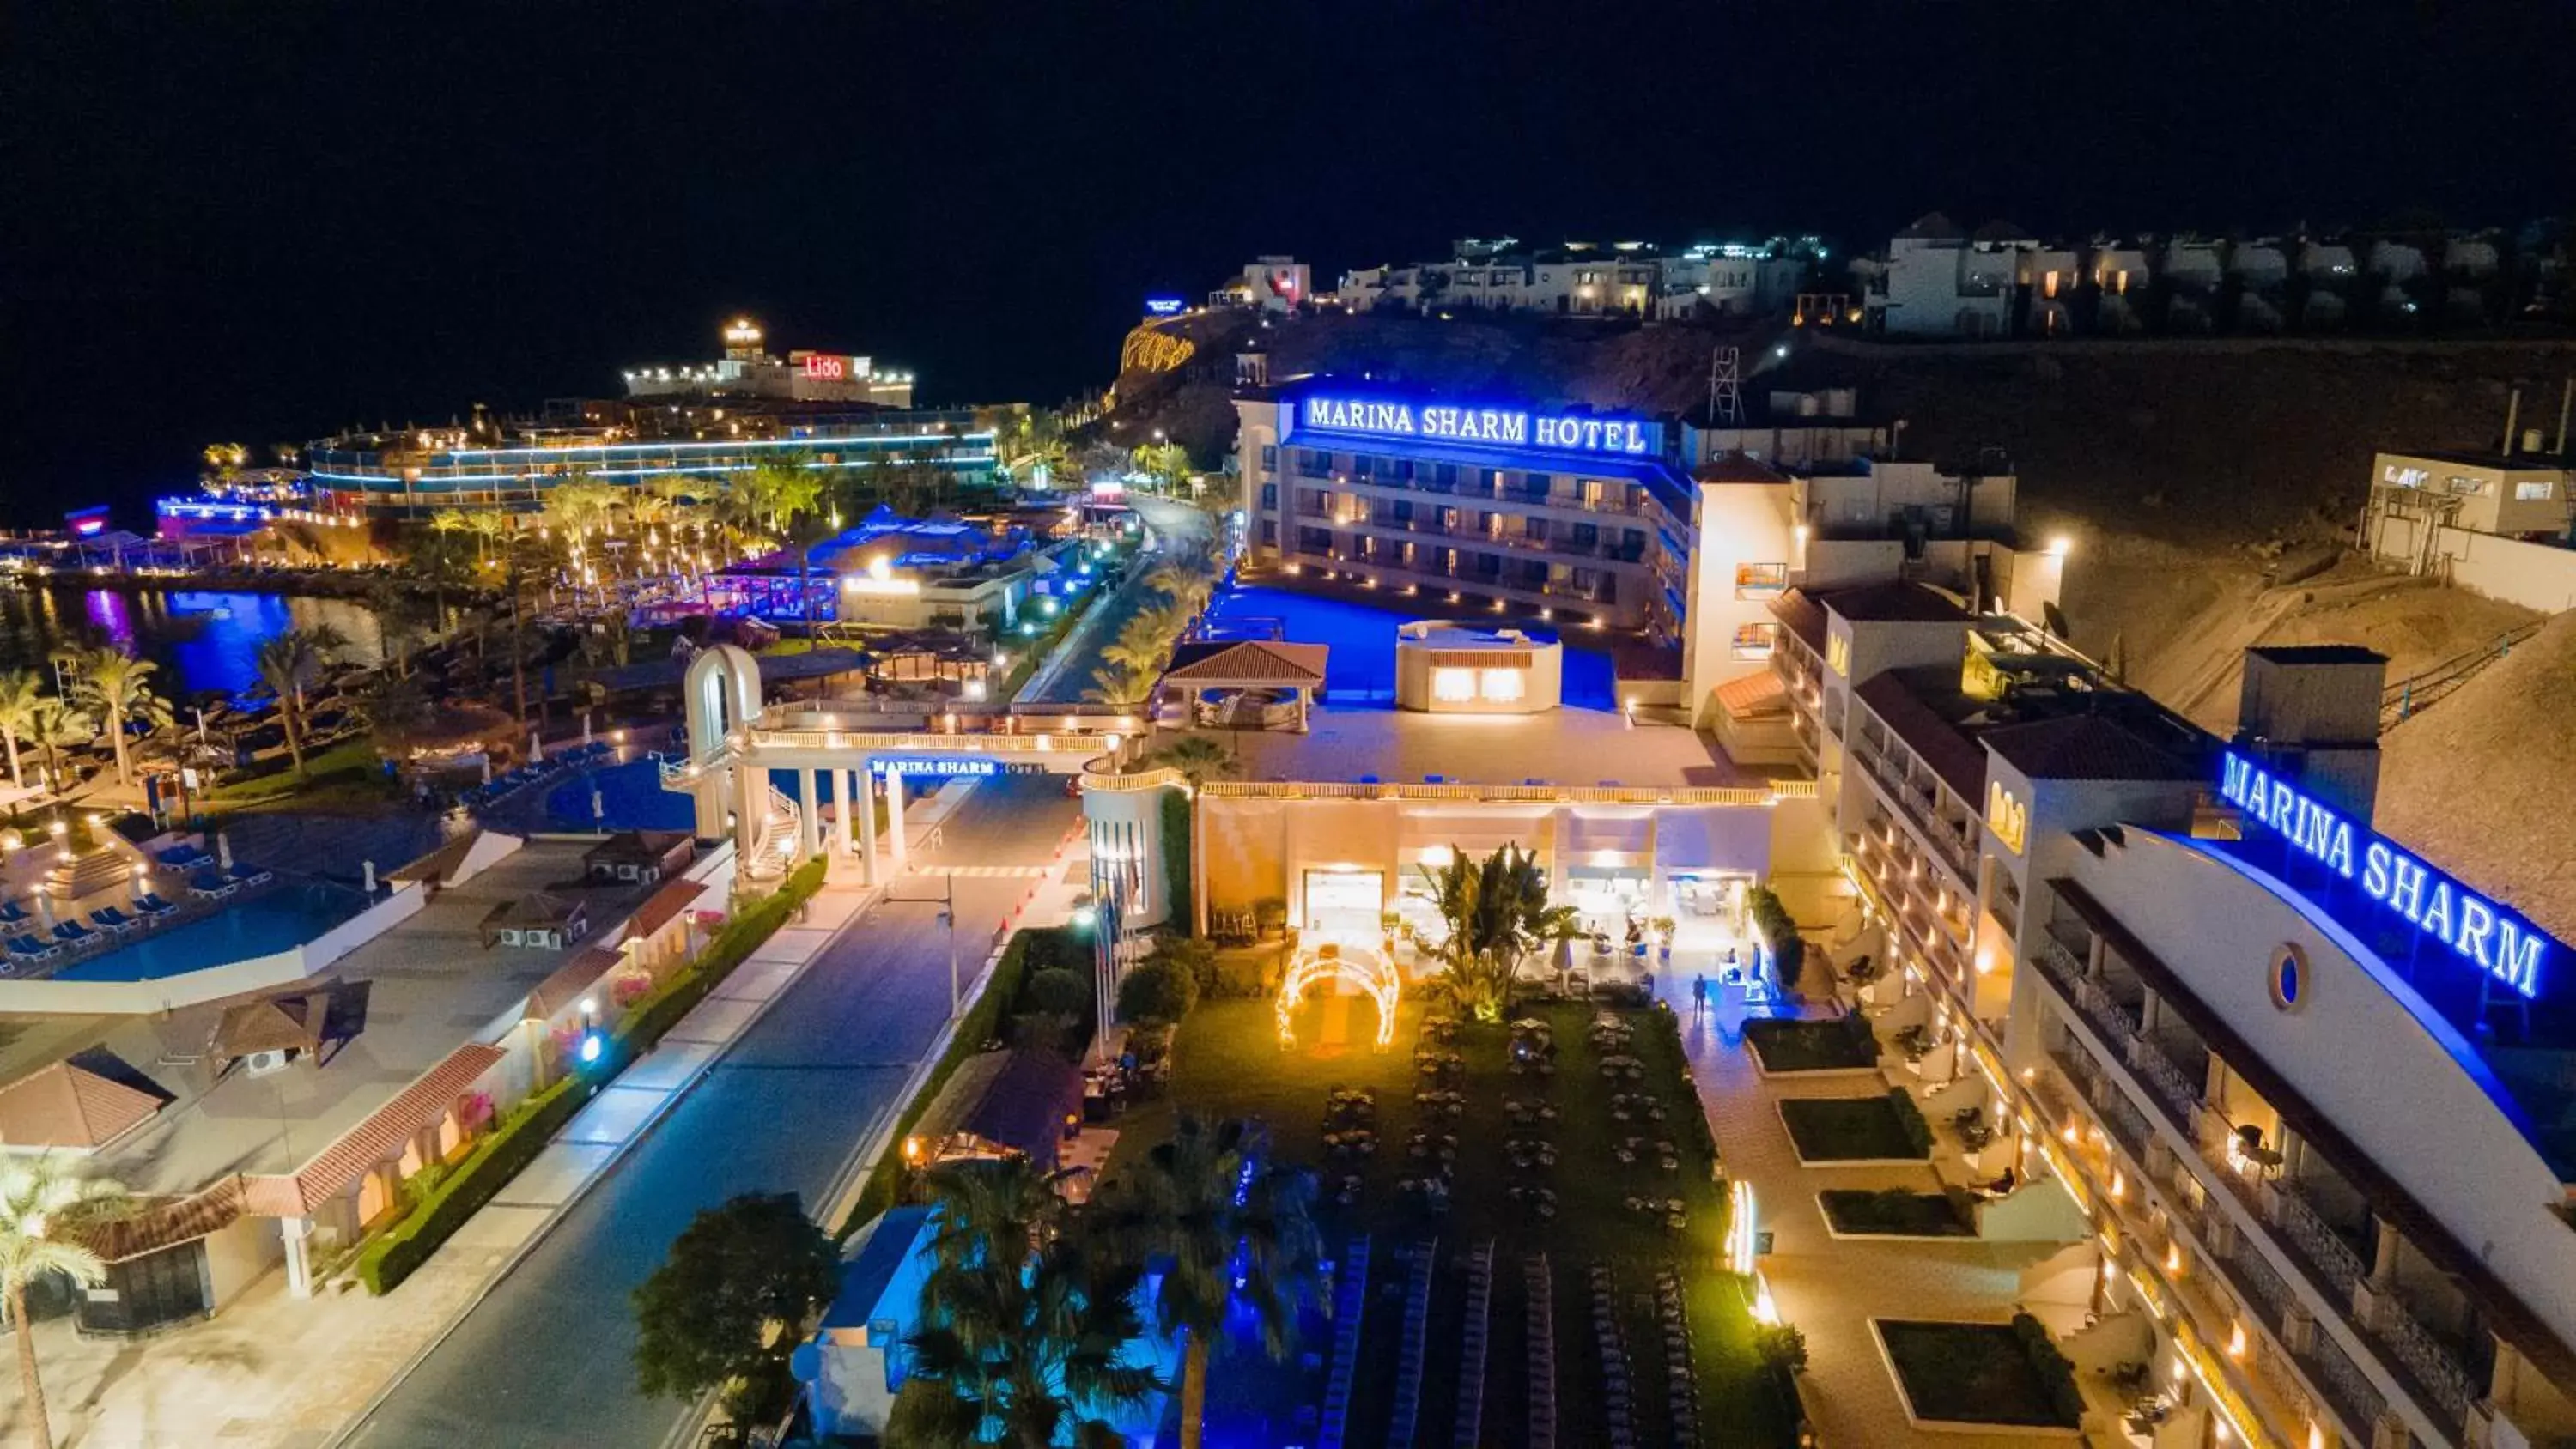 Night, Pool View in Marina Sharm Hotel